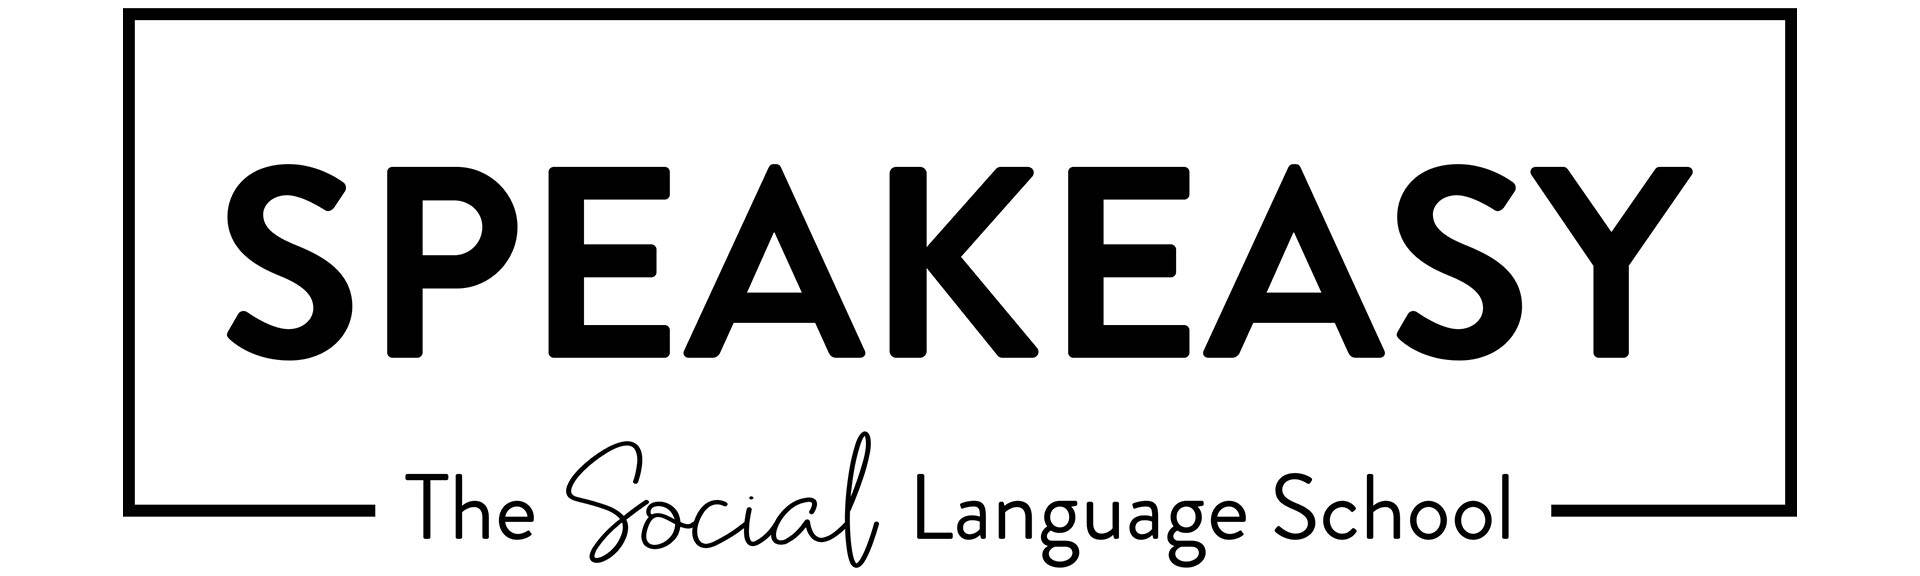 Frankfurt Language School Speakeasy